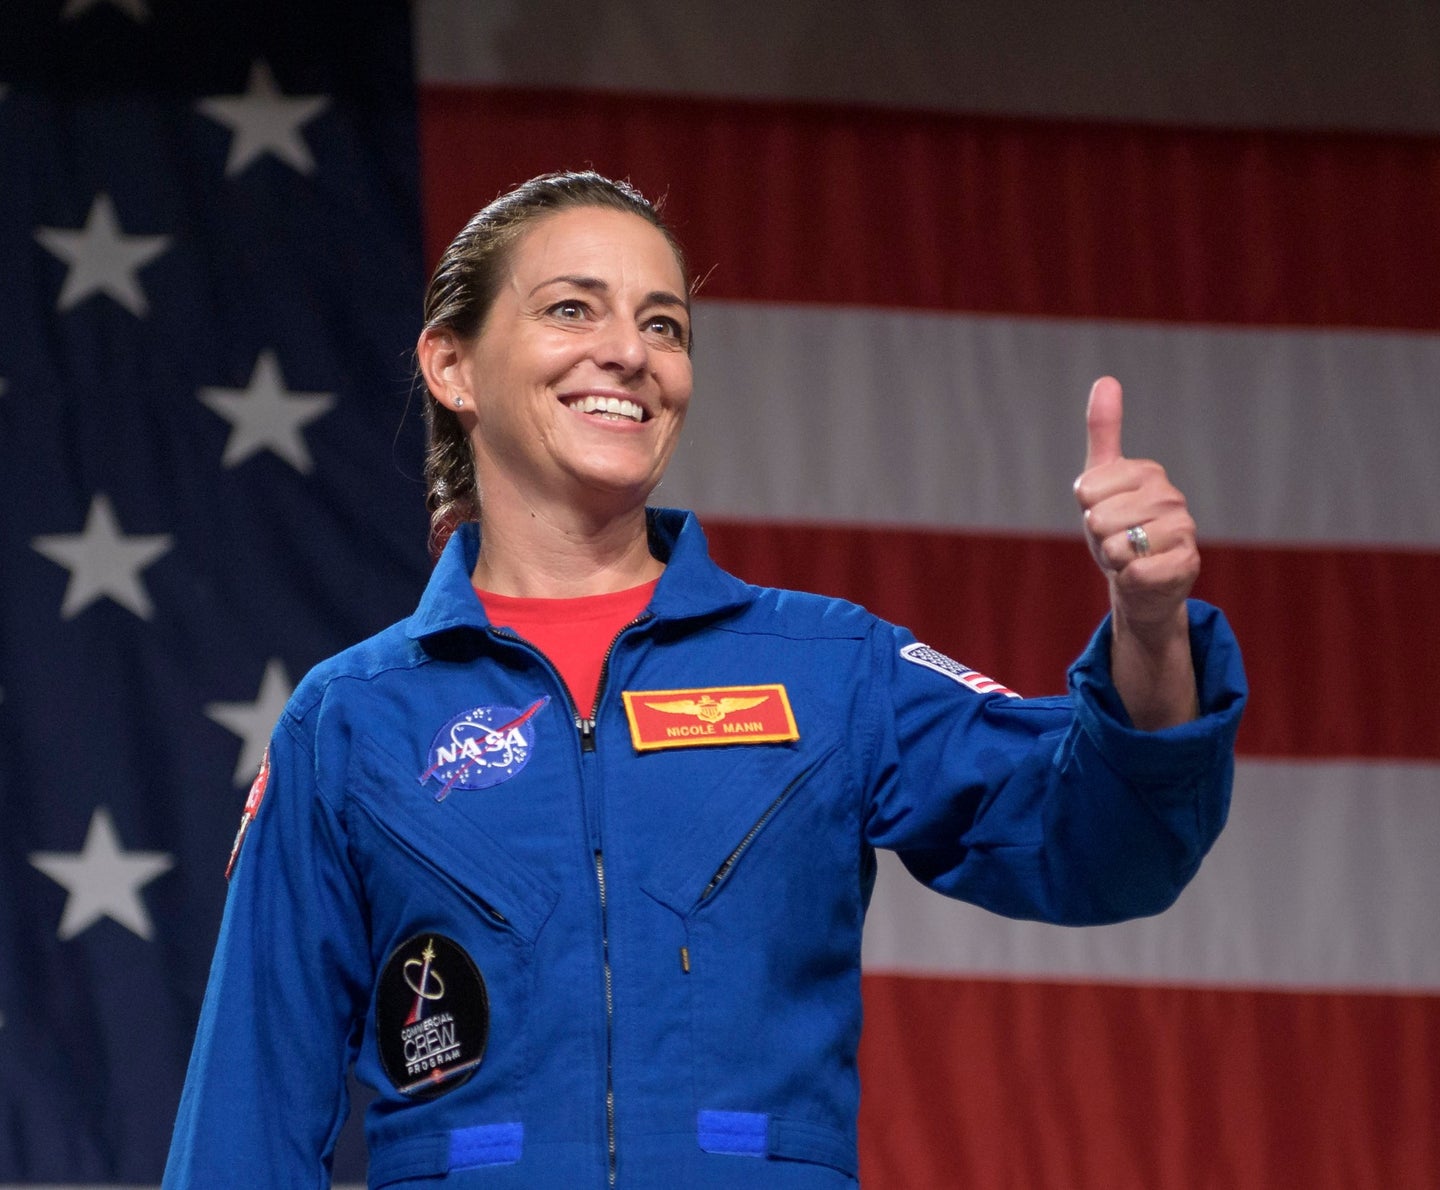 NASA astronaut Nicole Aunapu Mann at a NASA event in 2018.
